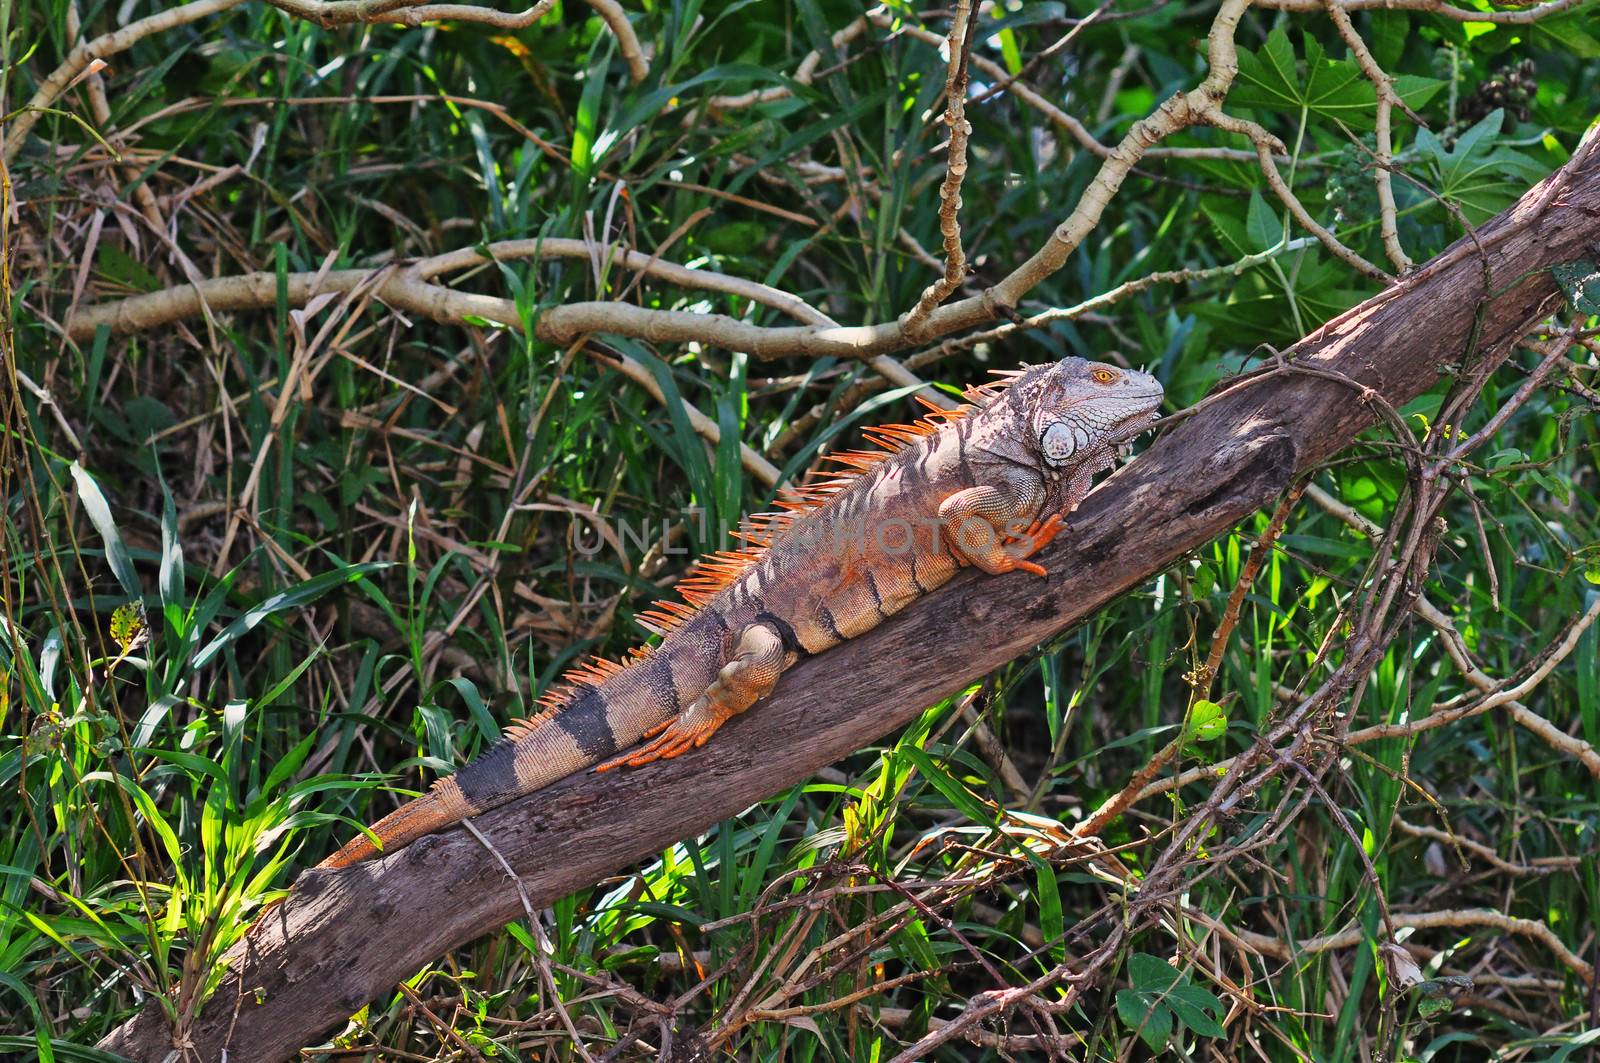 Green iguana on branch by Mirage3